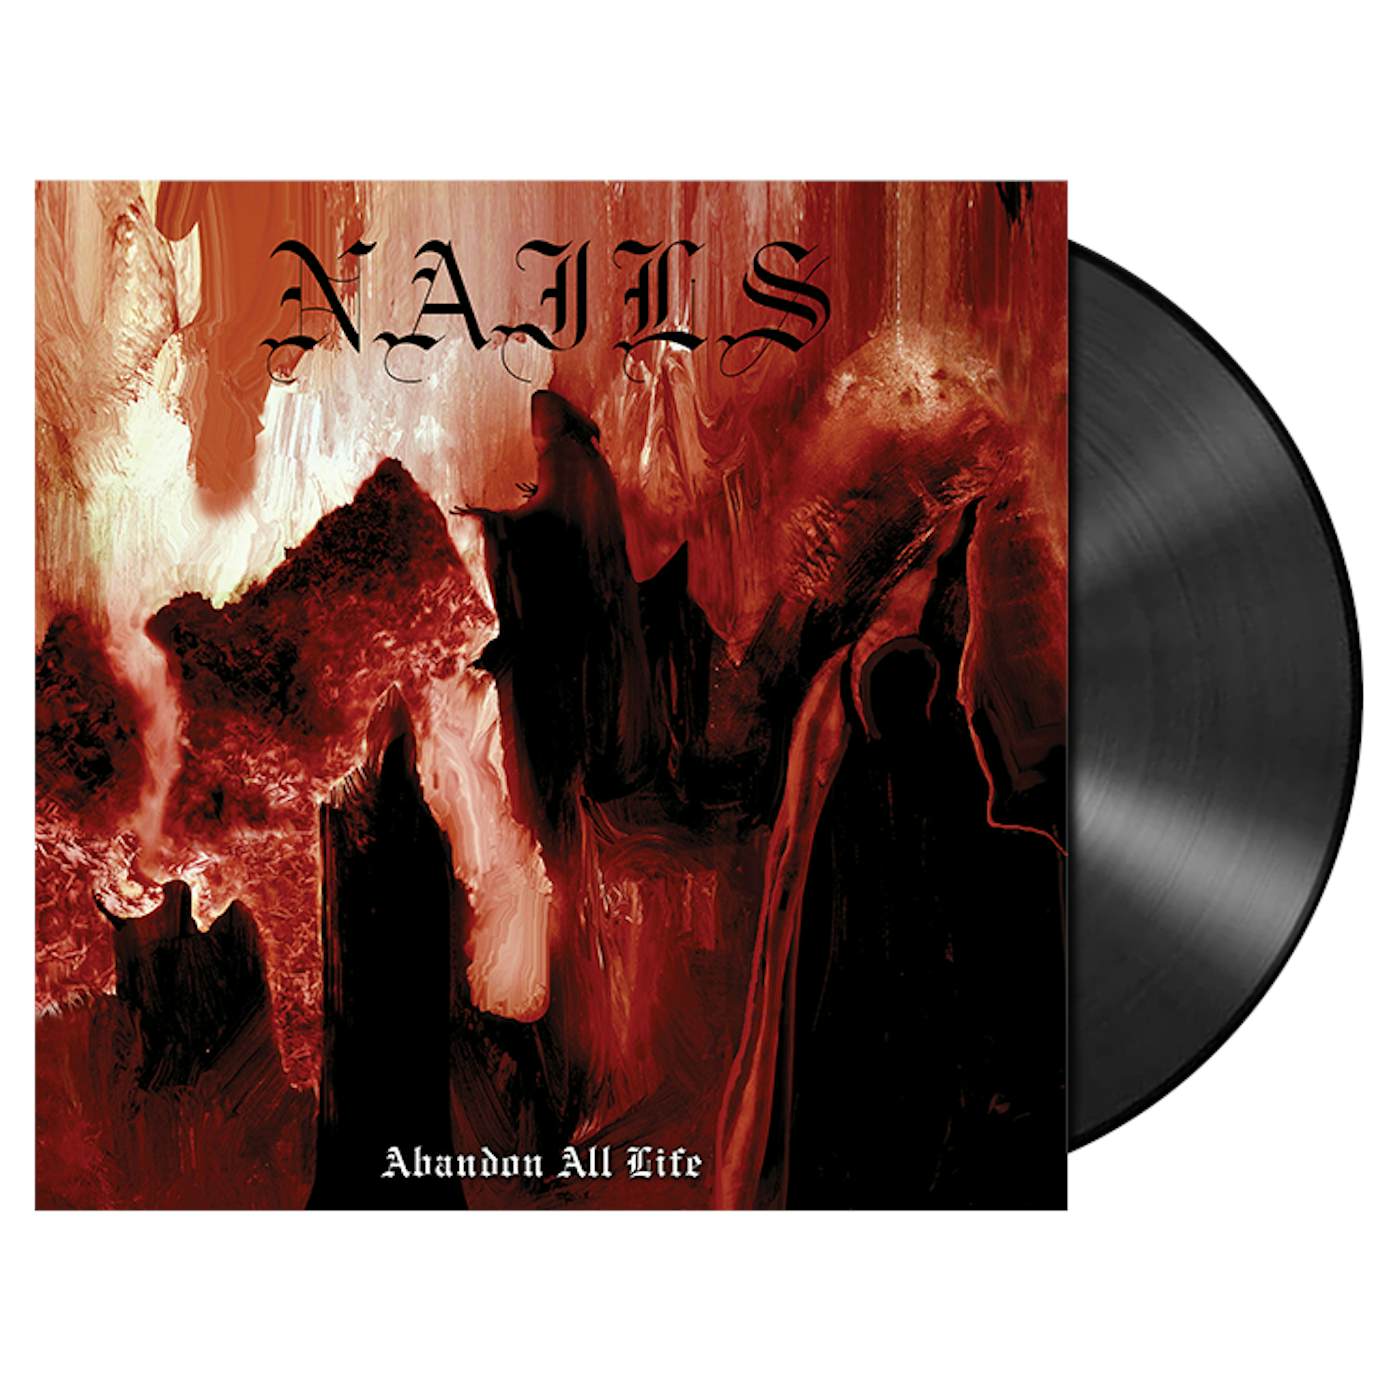 NAILS - 'Abandon All Life' LP (Vinyl)